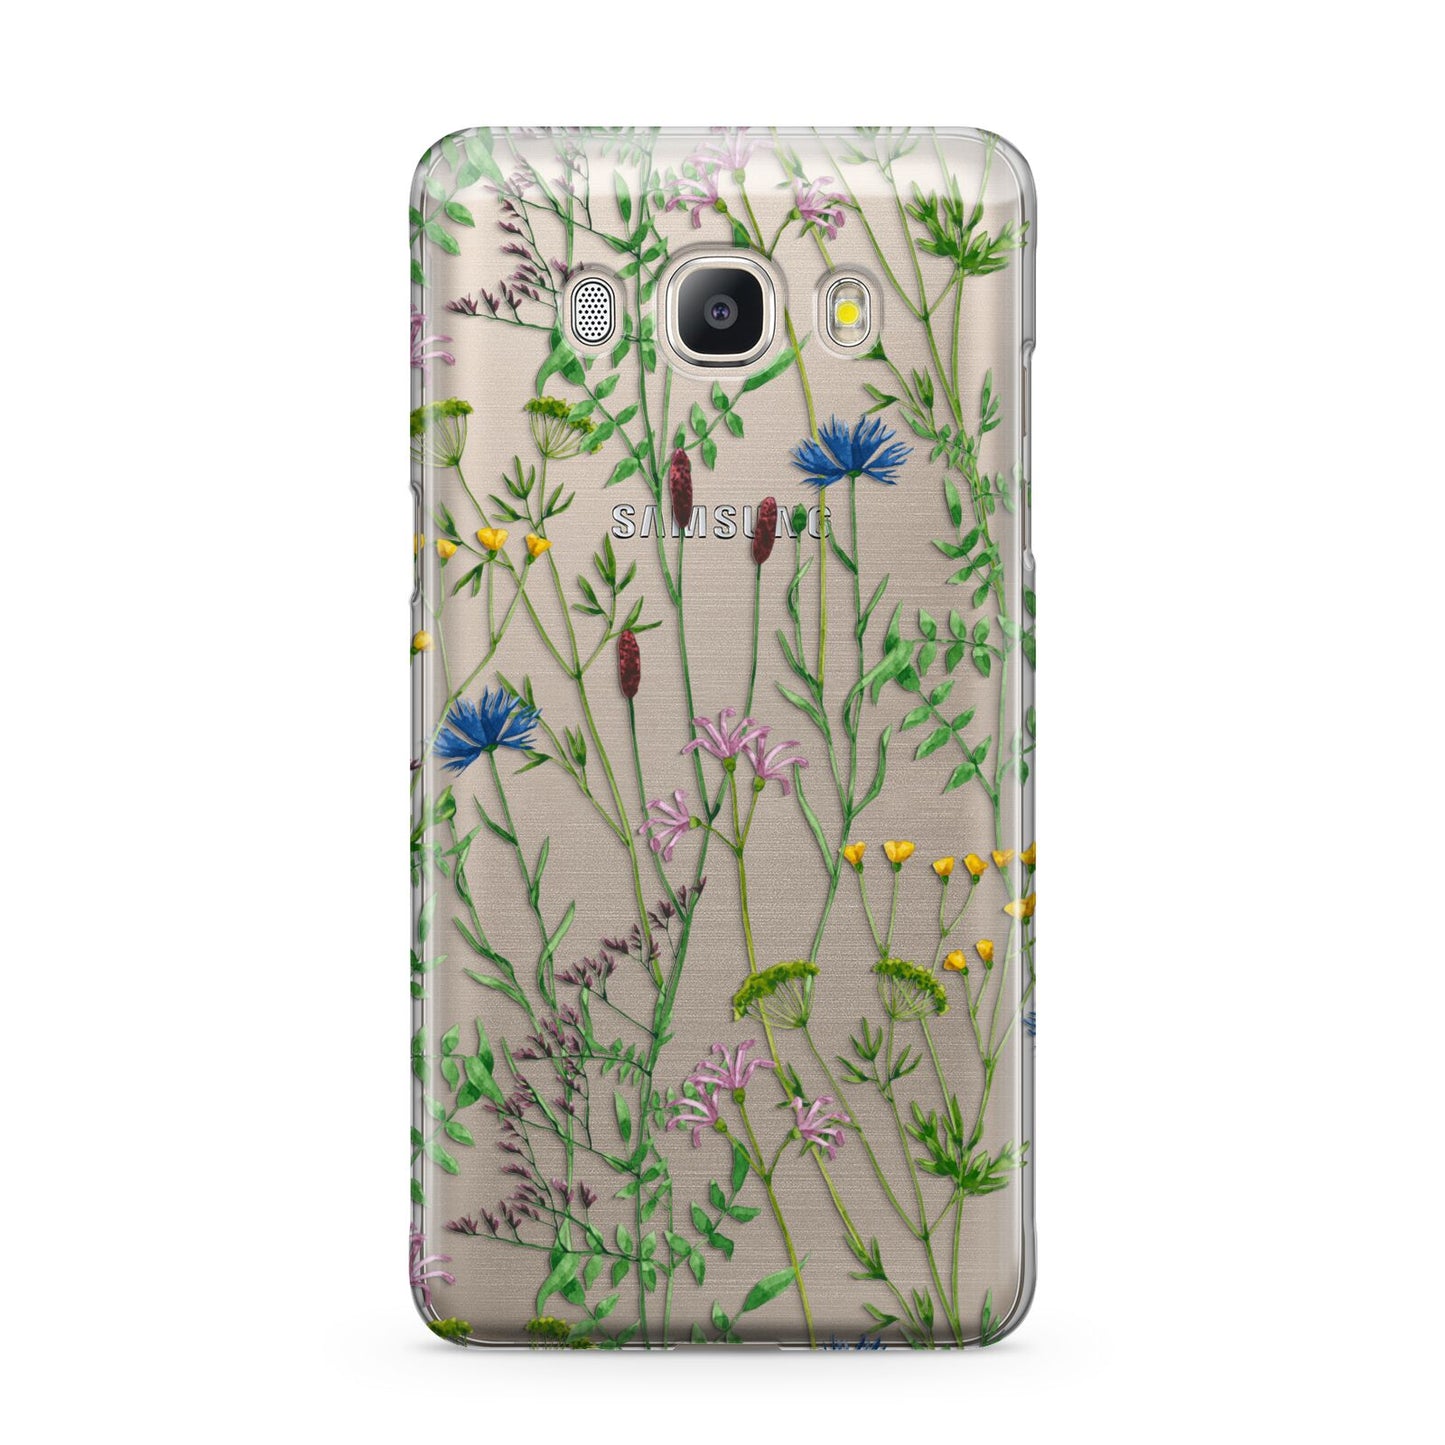 Wildflowers Samsung Galaxy J5 2016 Case